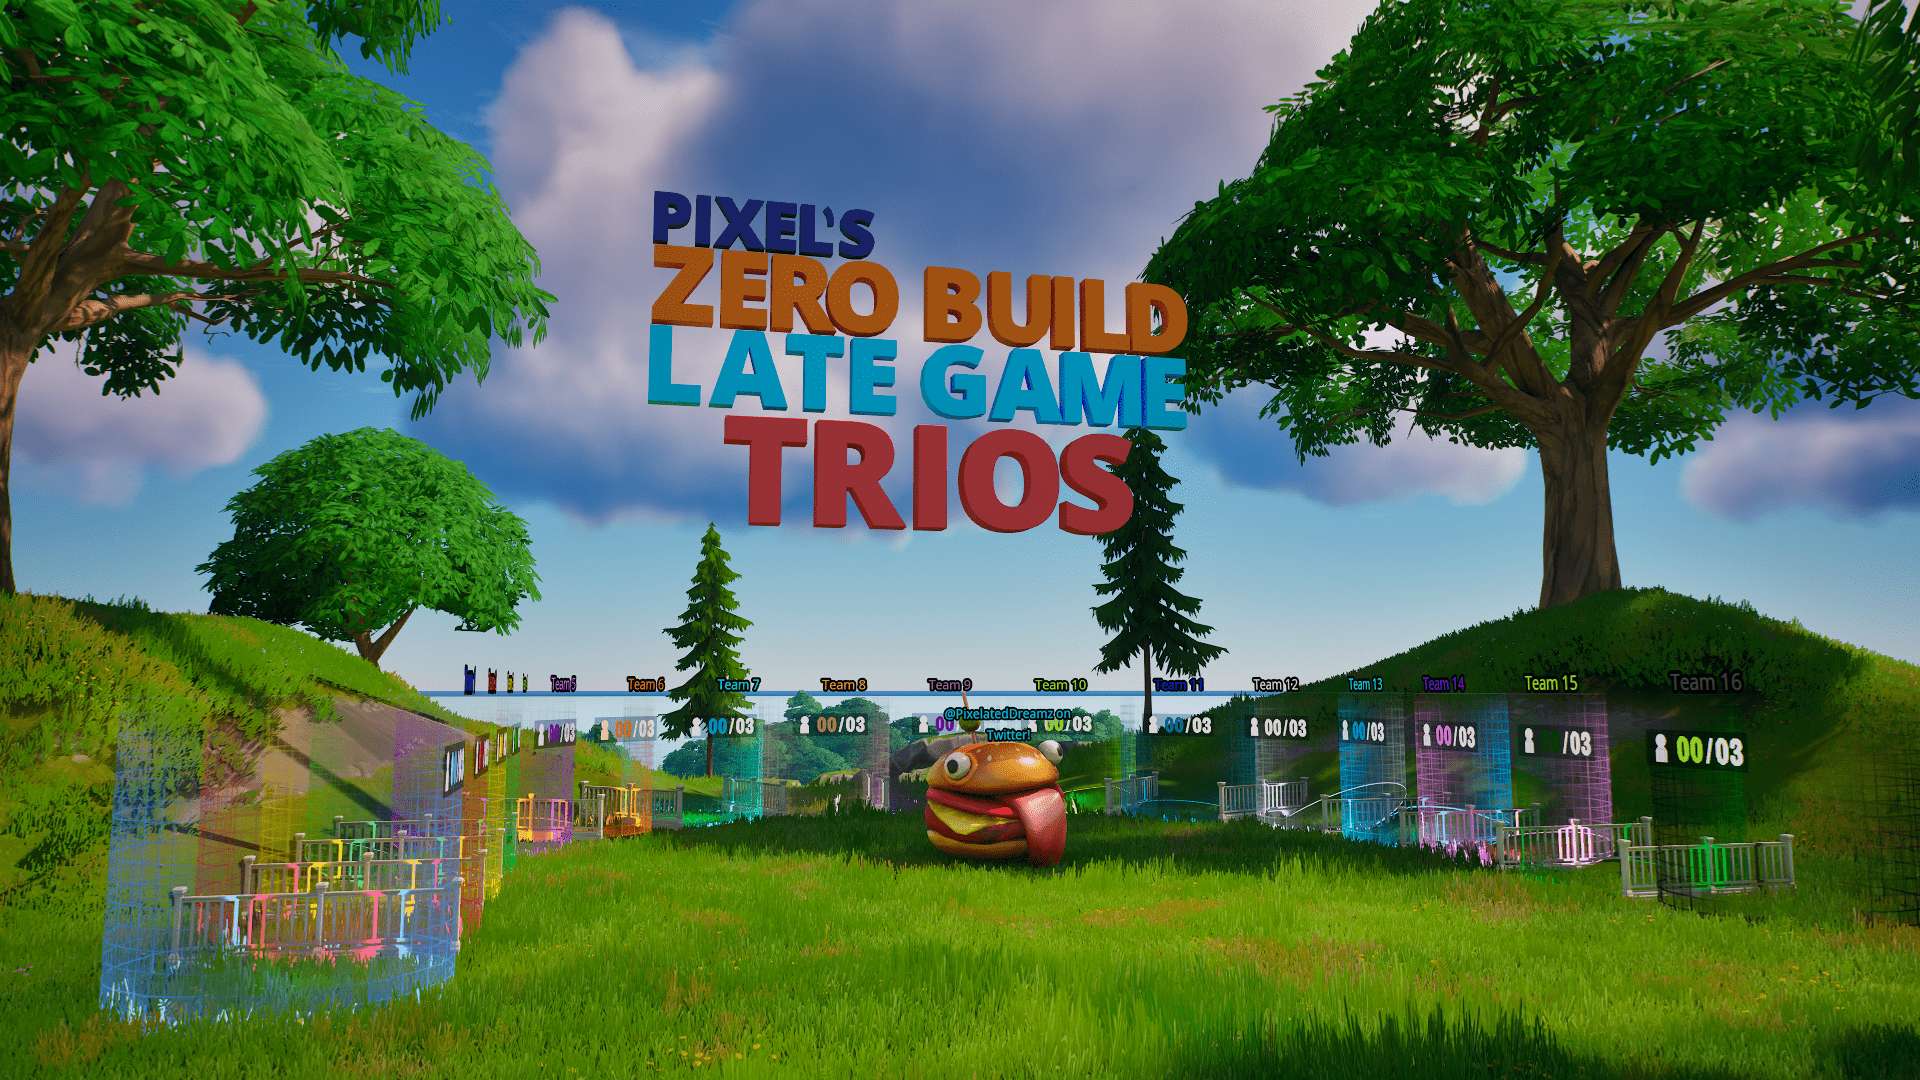 Pixel's Zero Build Late Game Trios